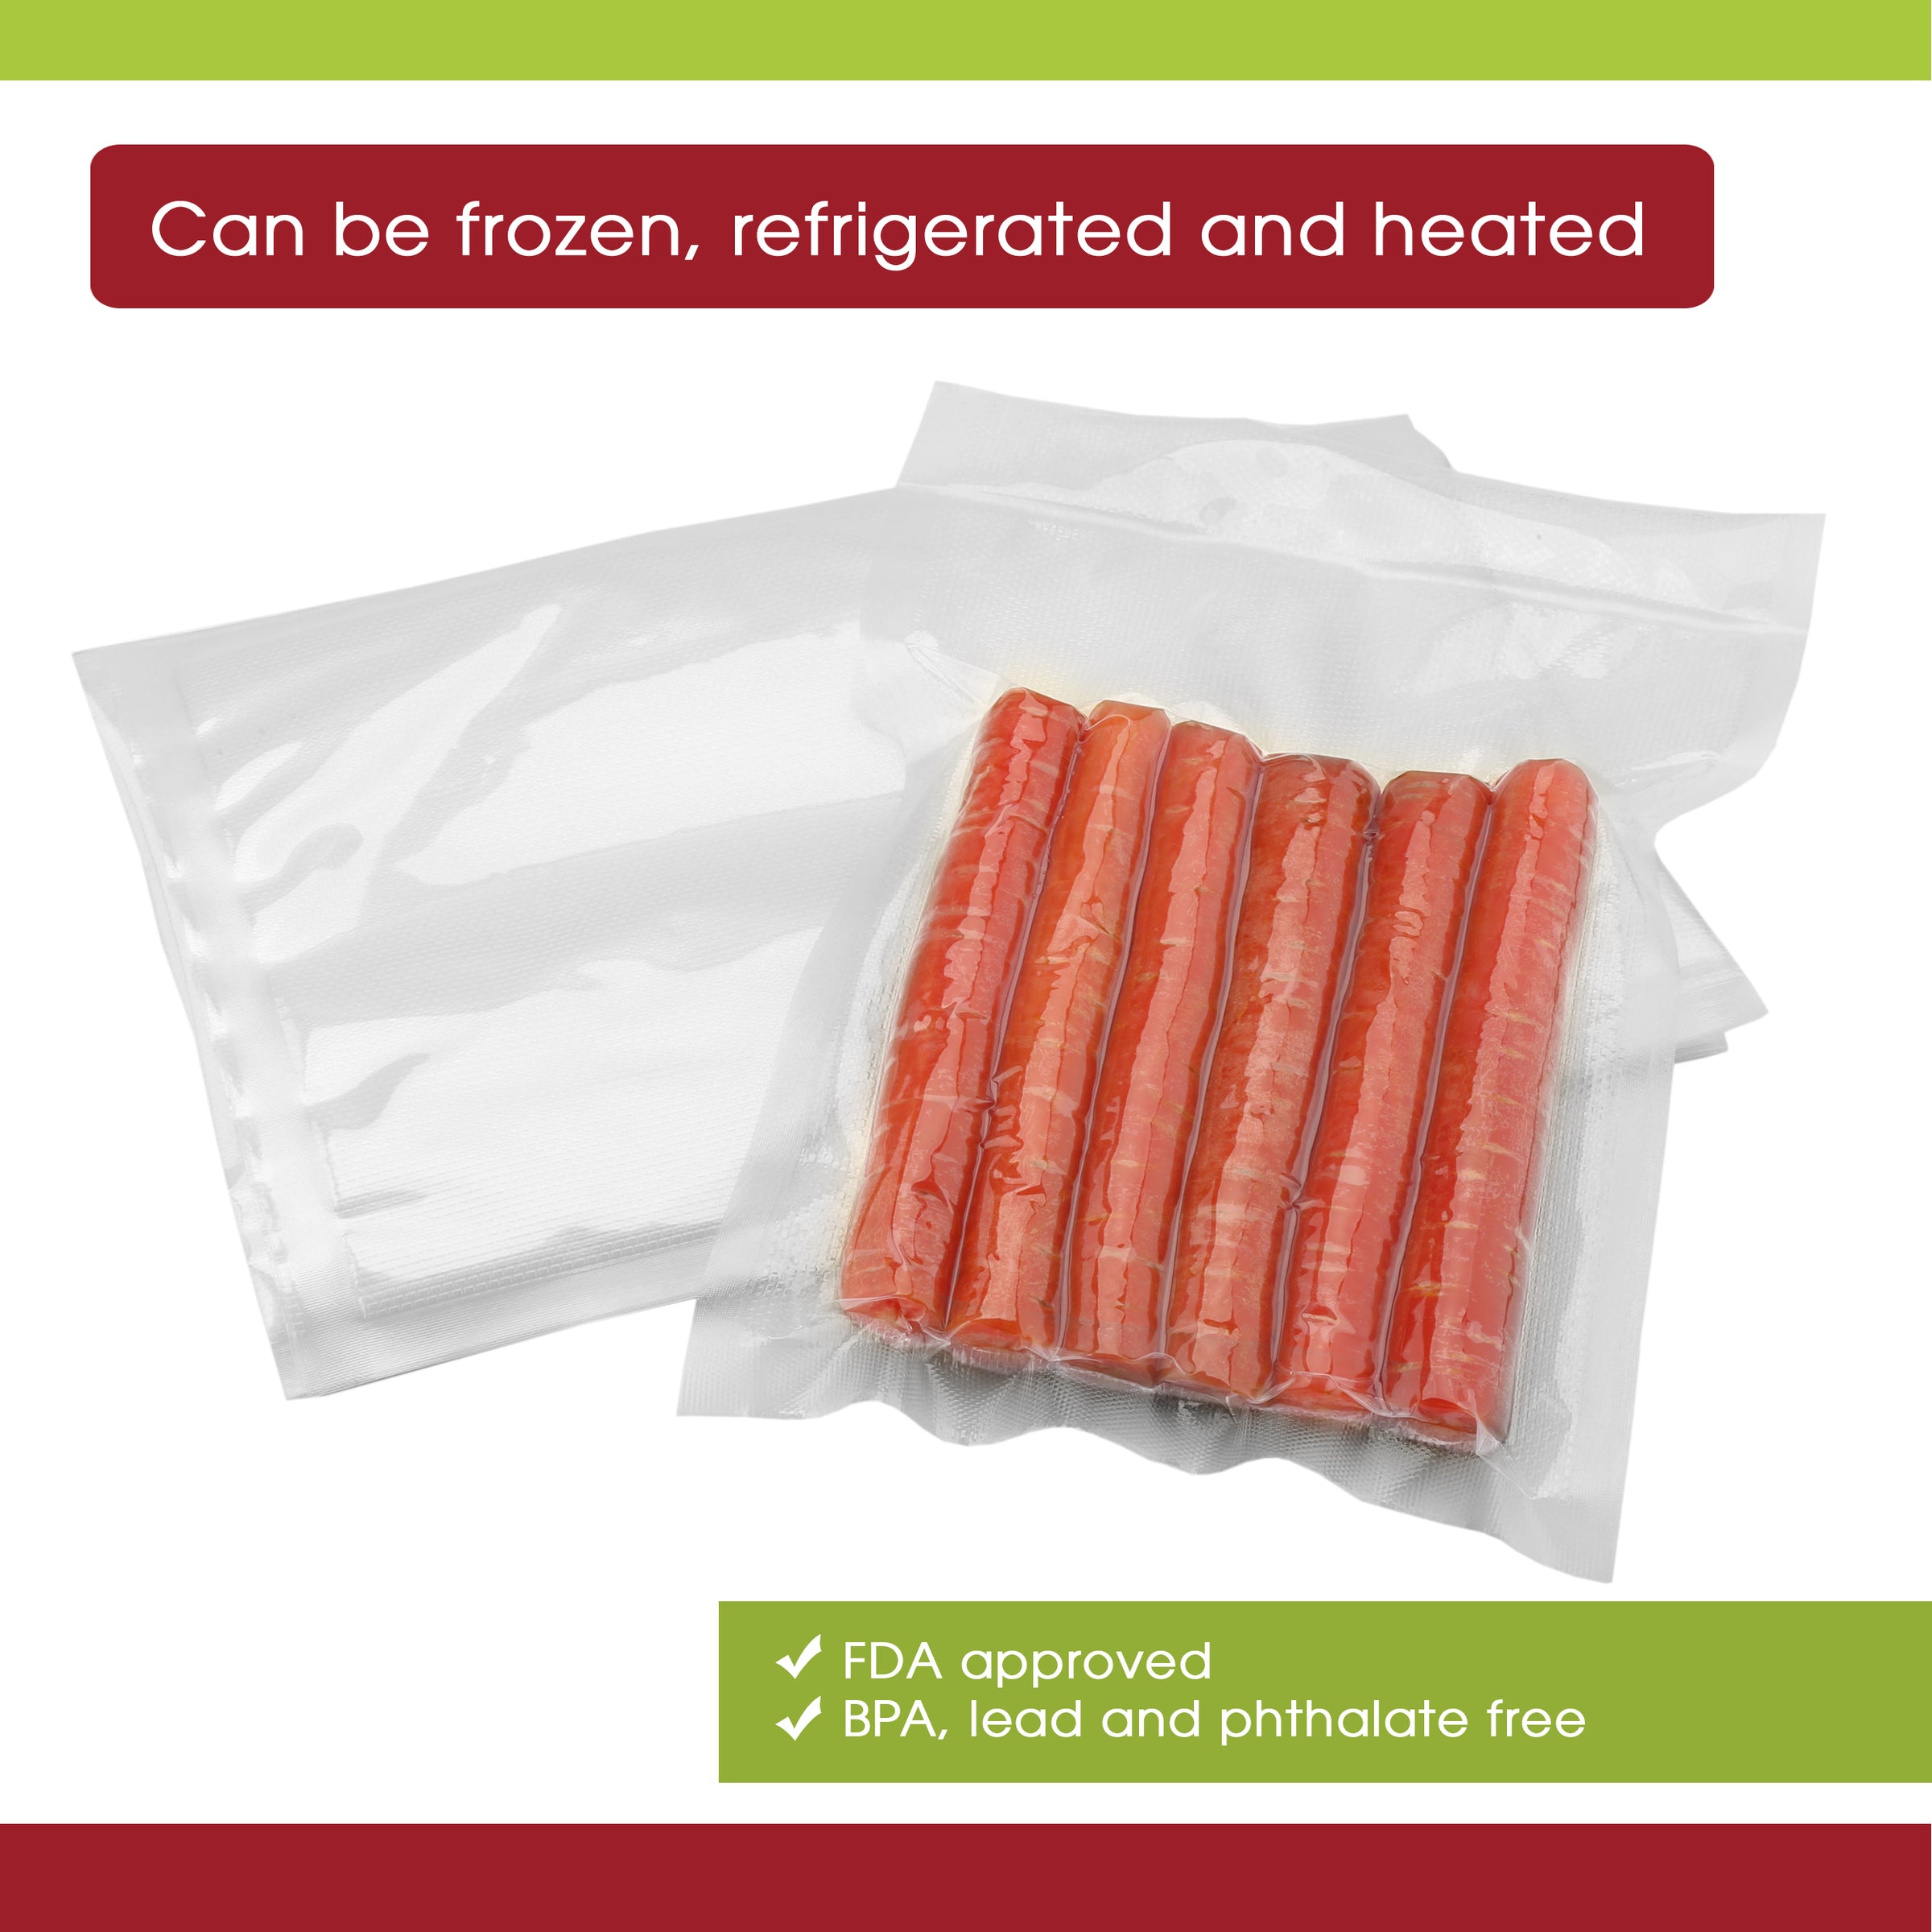 100-8x12 Bags Food Magic Seal for Vacuum Sealer Food Storage bags! Great Size: 8 in